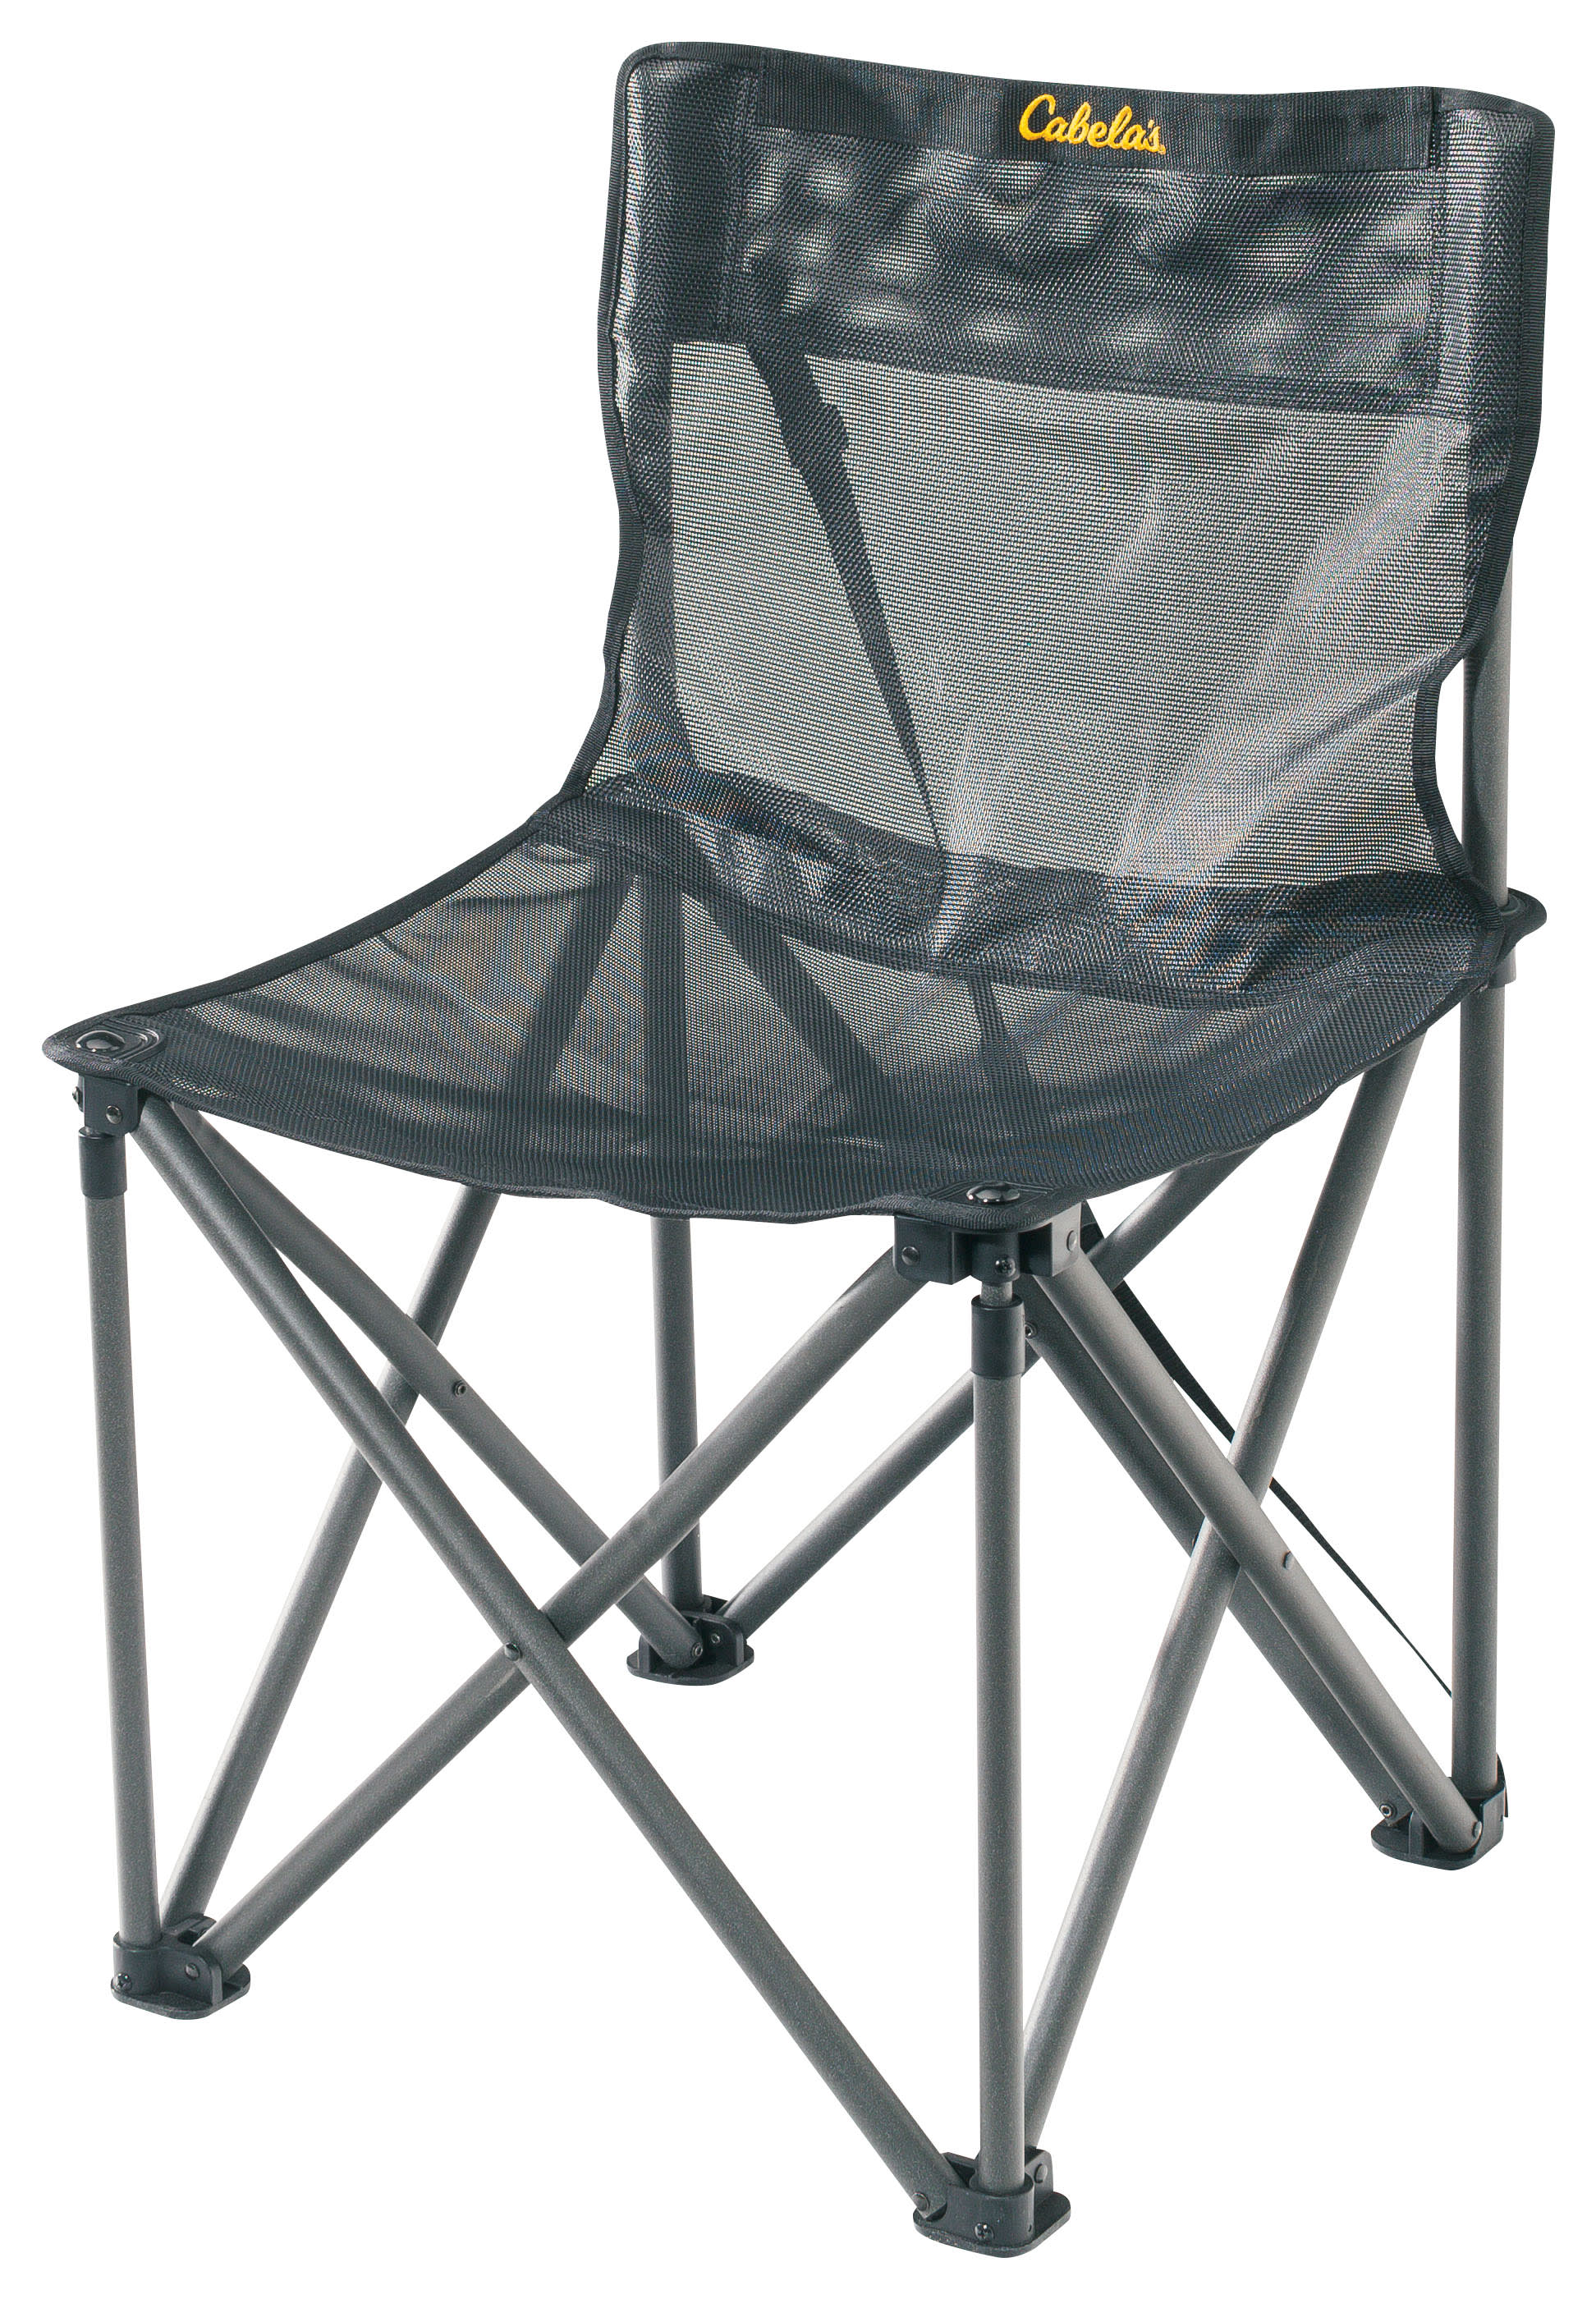 Cabela's® Comfort Max Quad Folding Blind Chair